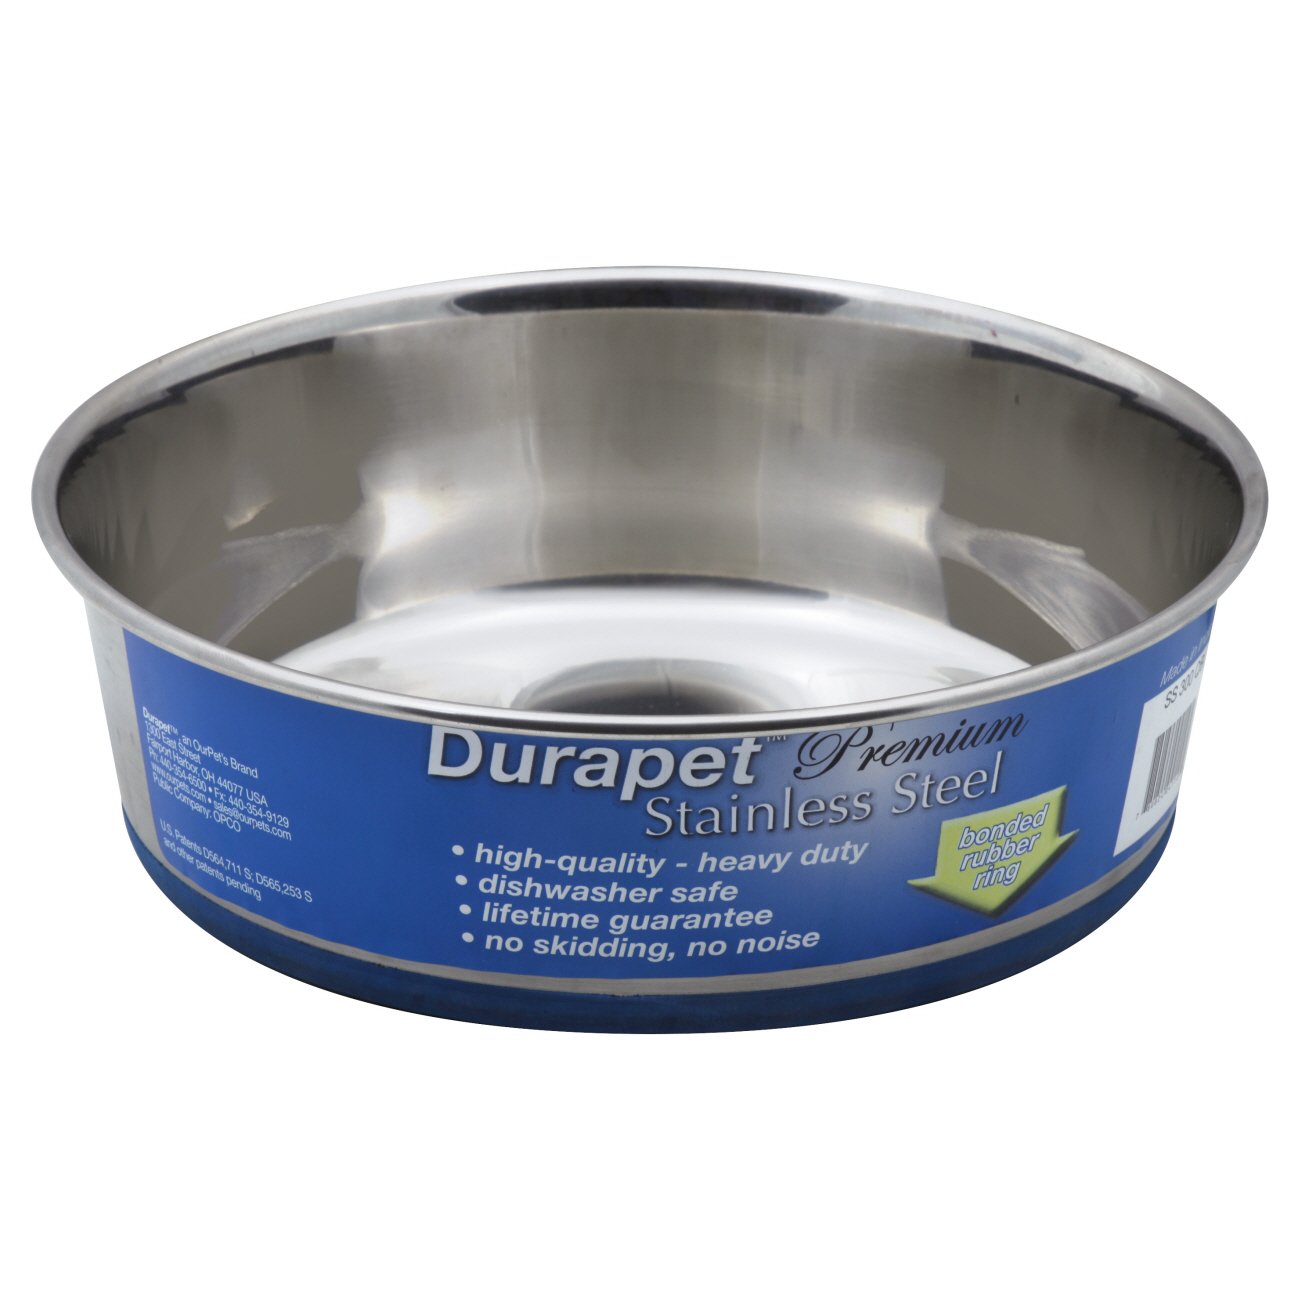 Durapet Premium Stainless Steel 3 Quart Bowl - Shop Dogs at H-E-B